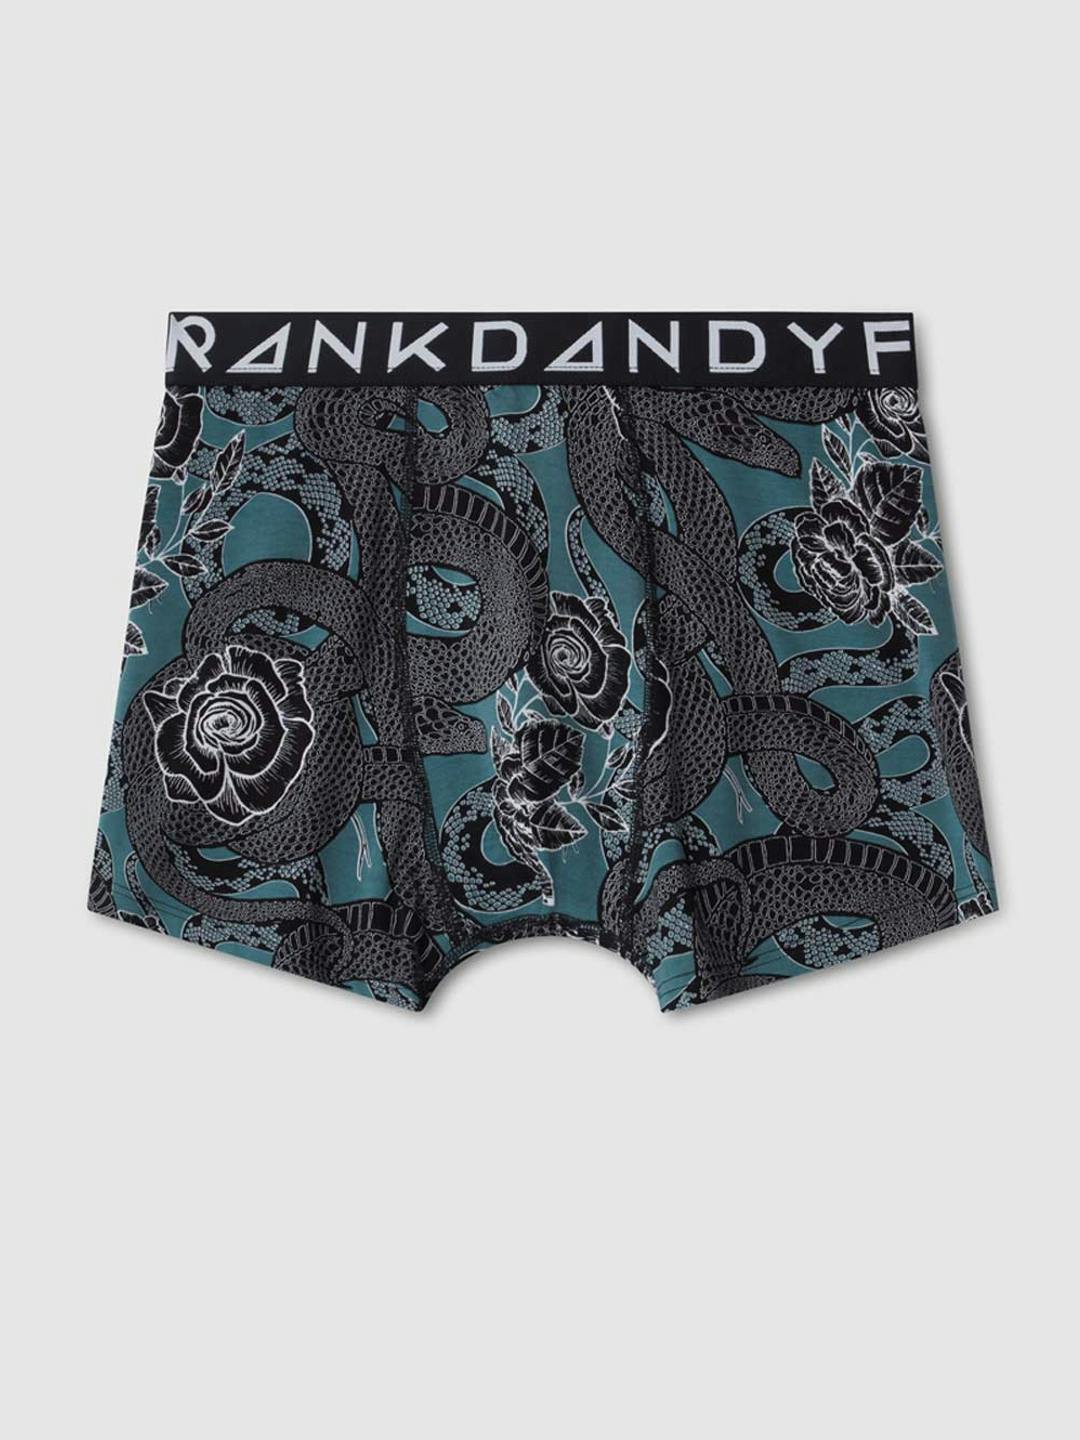 Snake Boxer - Black, Men's Underwear, Frank Dandy